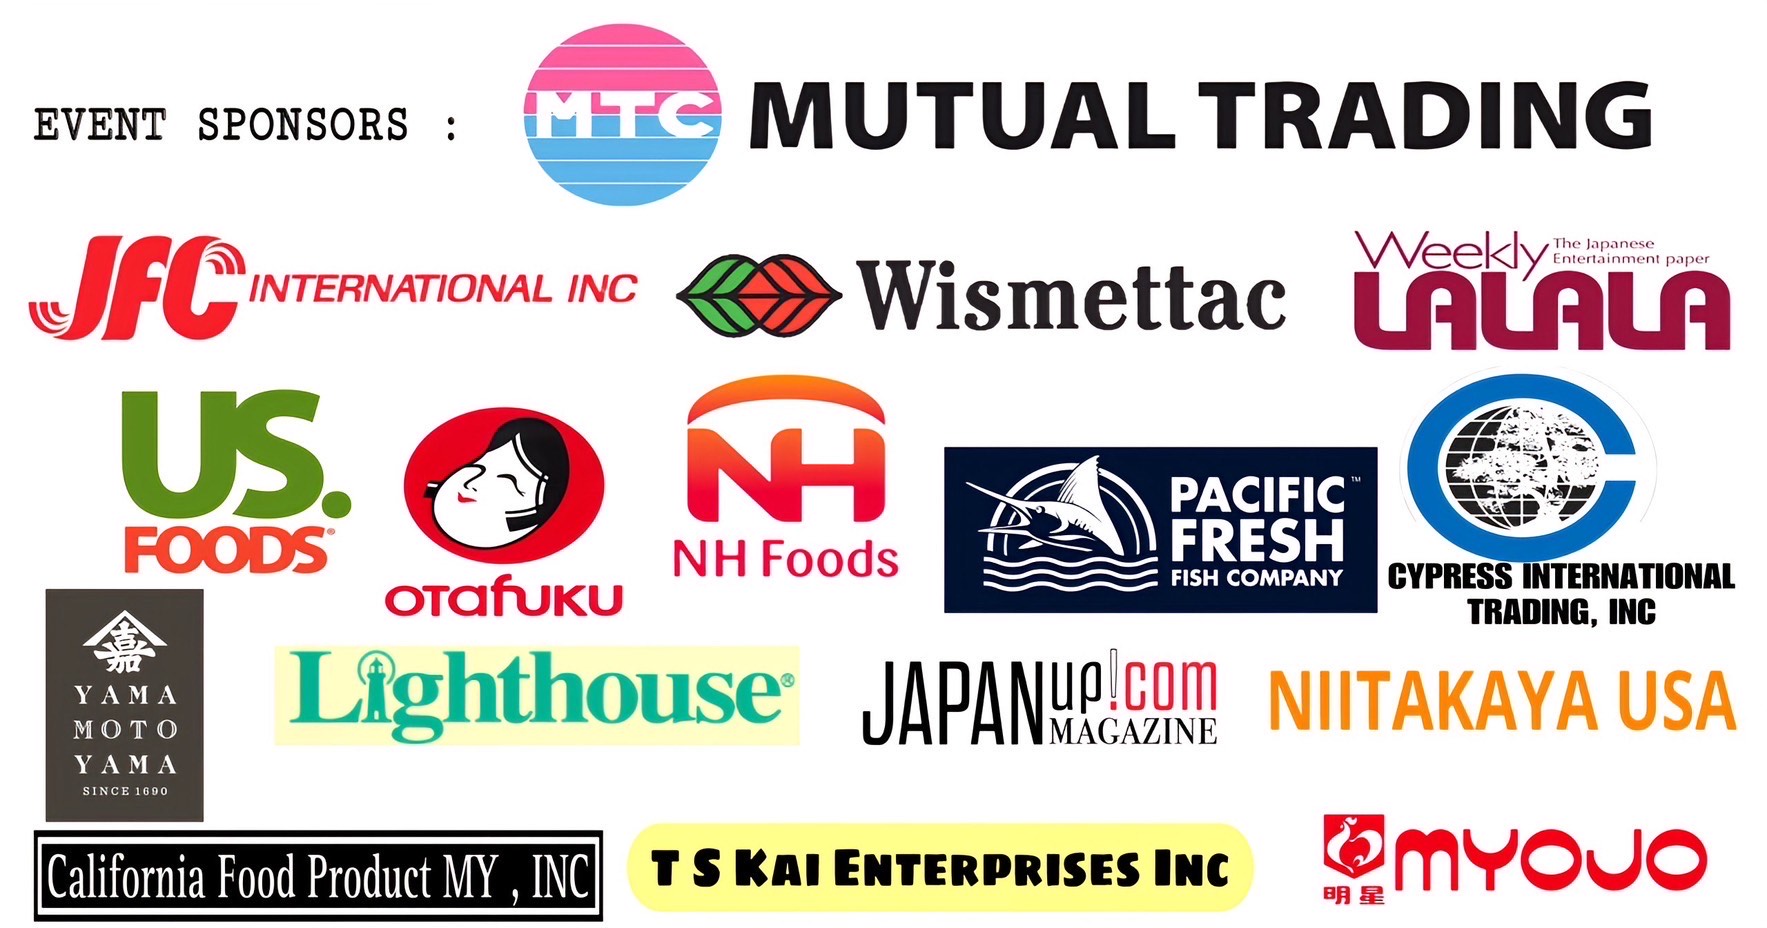 Bishamon Group 30 years anniversary Event Sponsors list  (Mutual Trading Co., Inc.  JFC International Inc.  Wismettac Asian Foods, Inc. Pacific Fresh Fish Co. Otafuku Foods , US Foods, Day-LeeFoods, Inc. CYPRESS INTERNATIONAL TRADING, INC.  Yamamotoyama U.S.A.Myojo USA, T S Kai Enterprises Inc , California Food Product MY , INC , Nitakaya USA,Light House, Weekly LALALA,LLC. JapanUp! mgazine.)